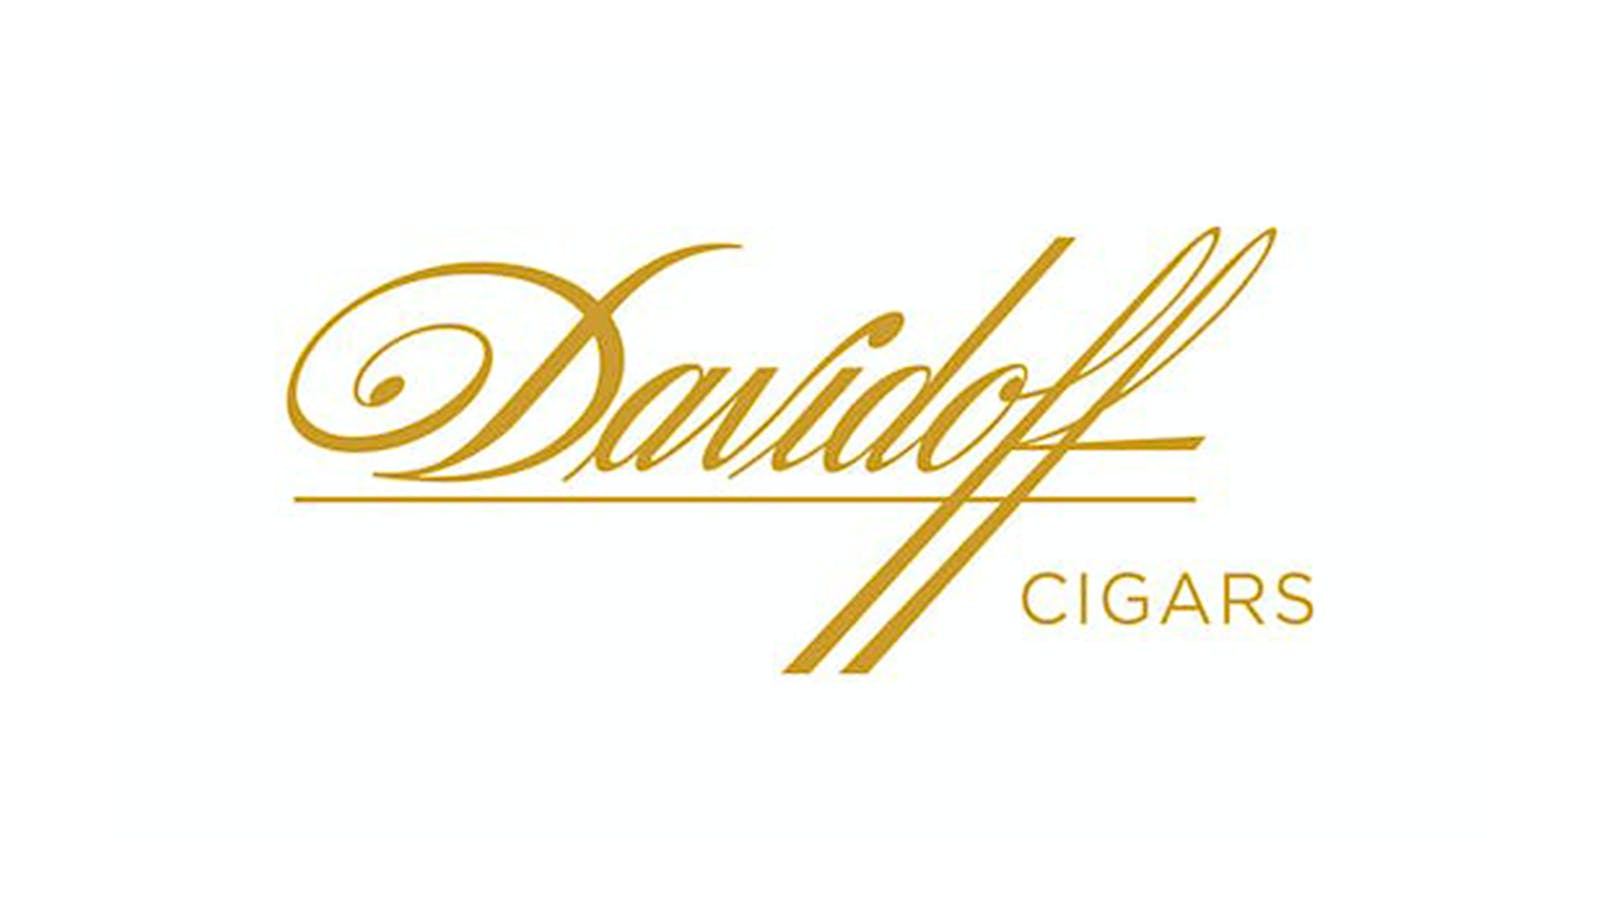 www.cigaraficionado.com